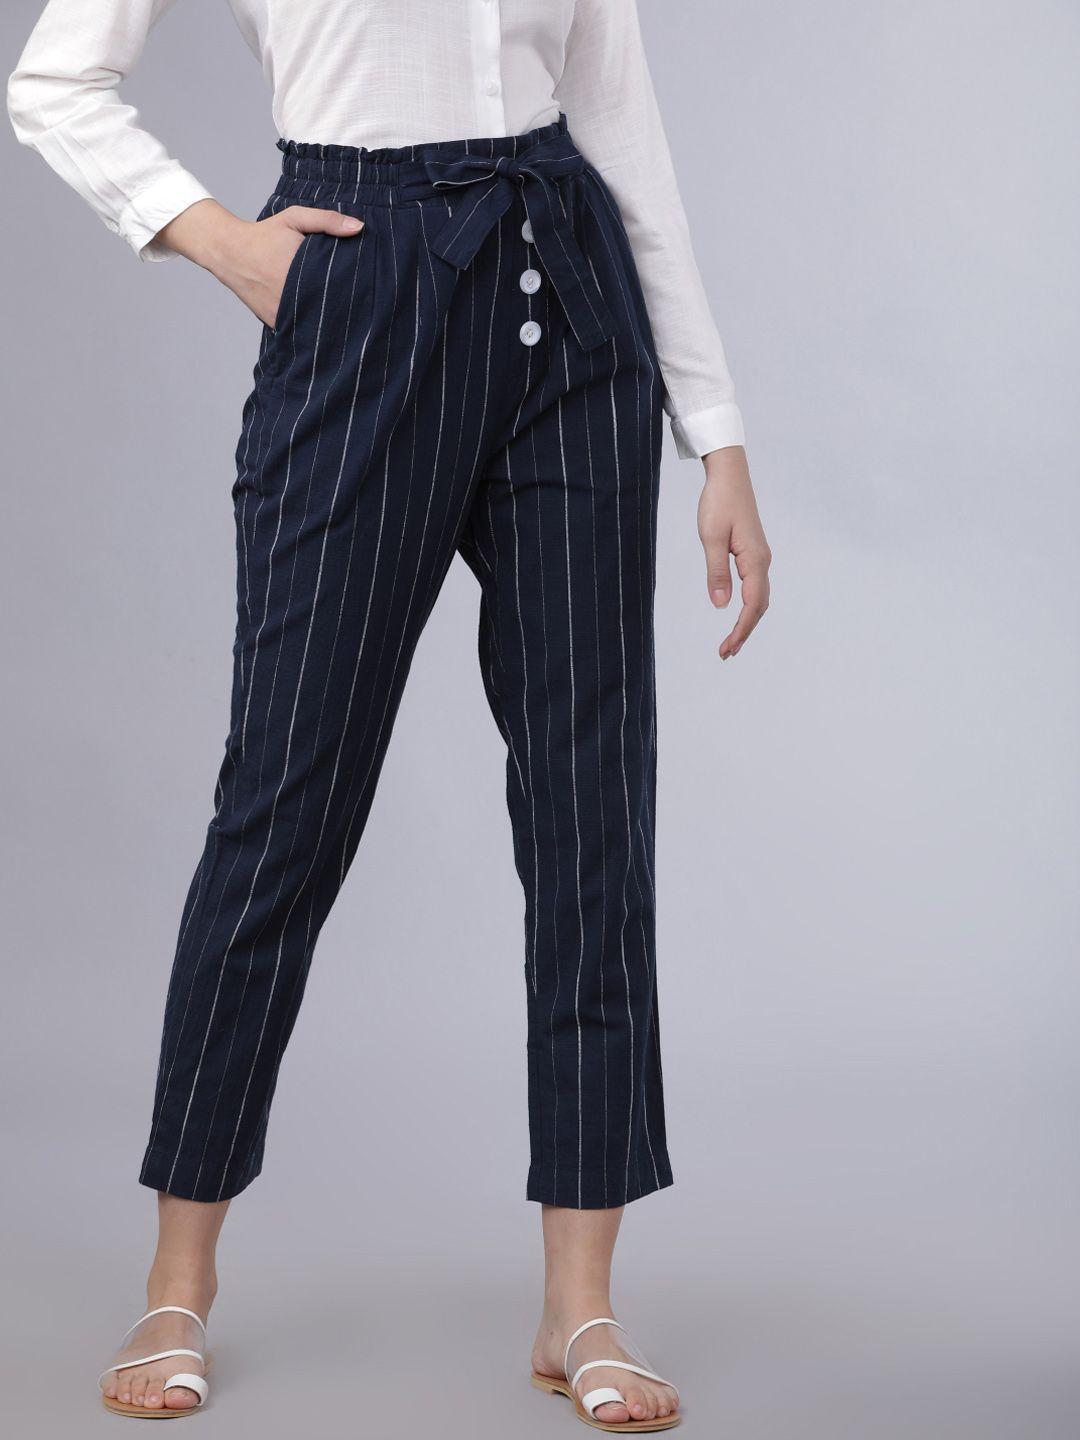 tokyo talkies women navy blue & white regular fit striped peg trousers